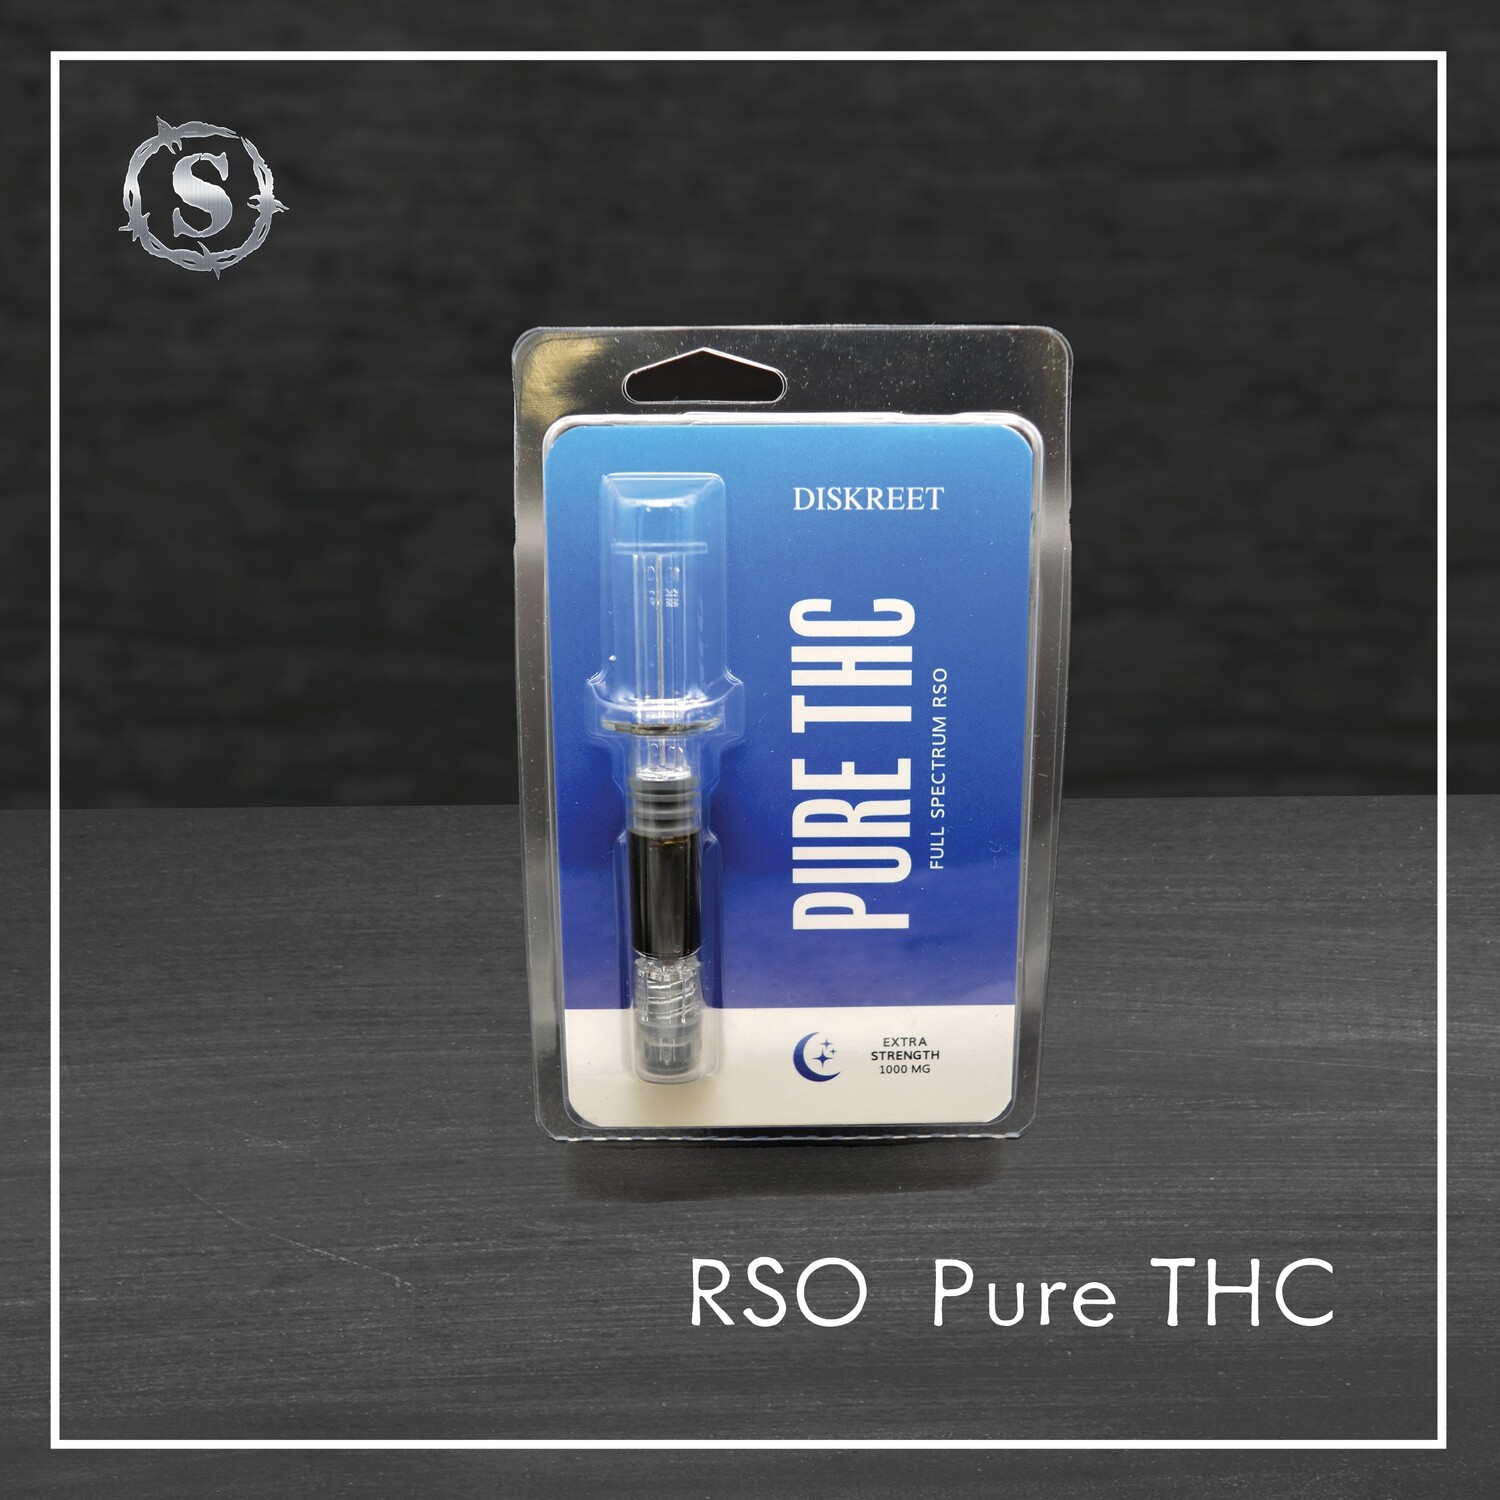 Diskreet RSO Blue Dream Pure THC RSO or Rick Simpson Oil (RSO-BD-122723) 83.30 % .8g Syringe (3965)